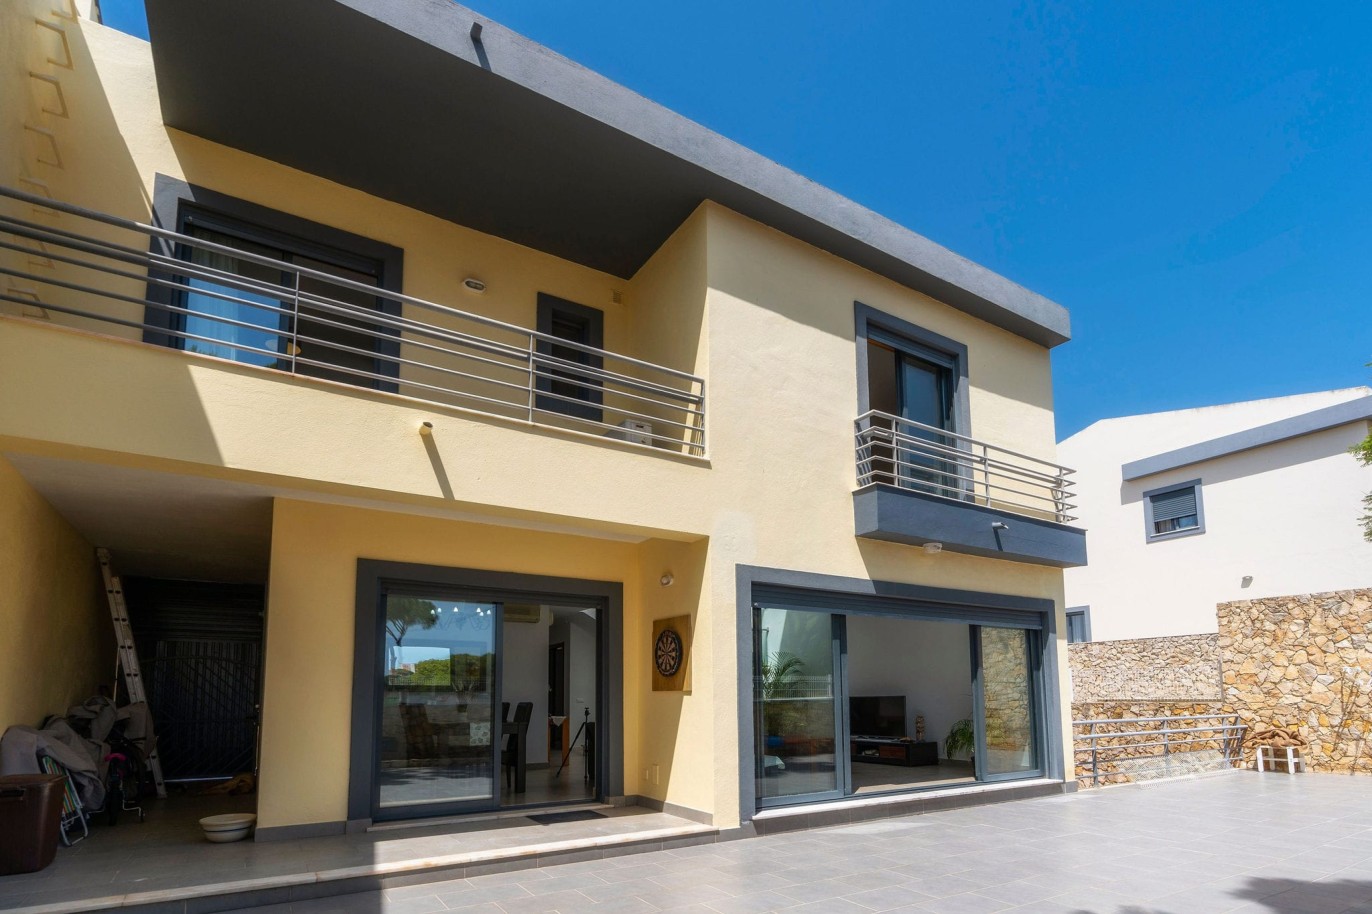 3+1 bedroom villa & 2 bedroom apartment for sale in Quarteira, Algarve_240770